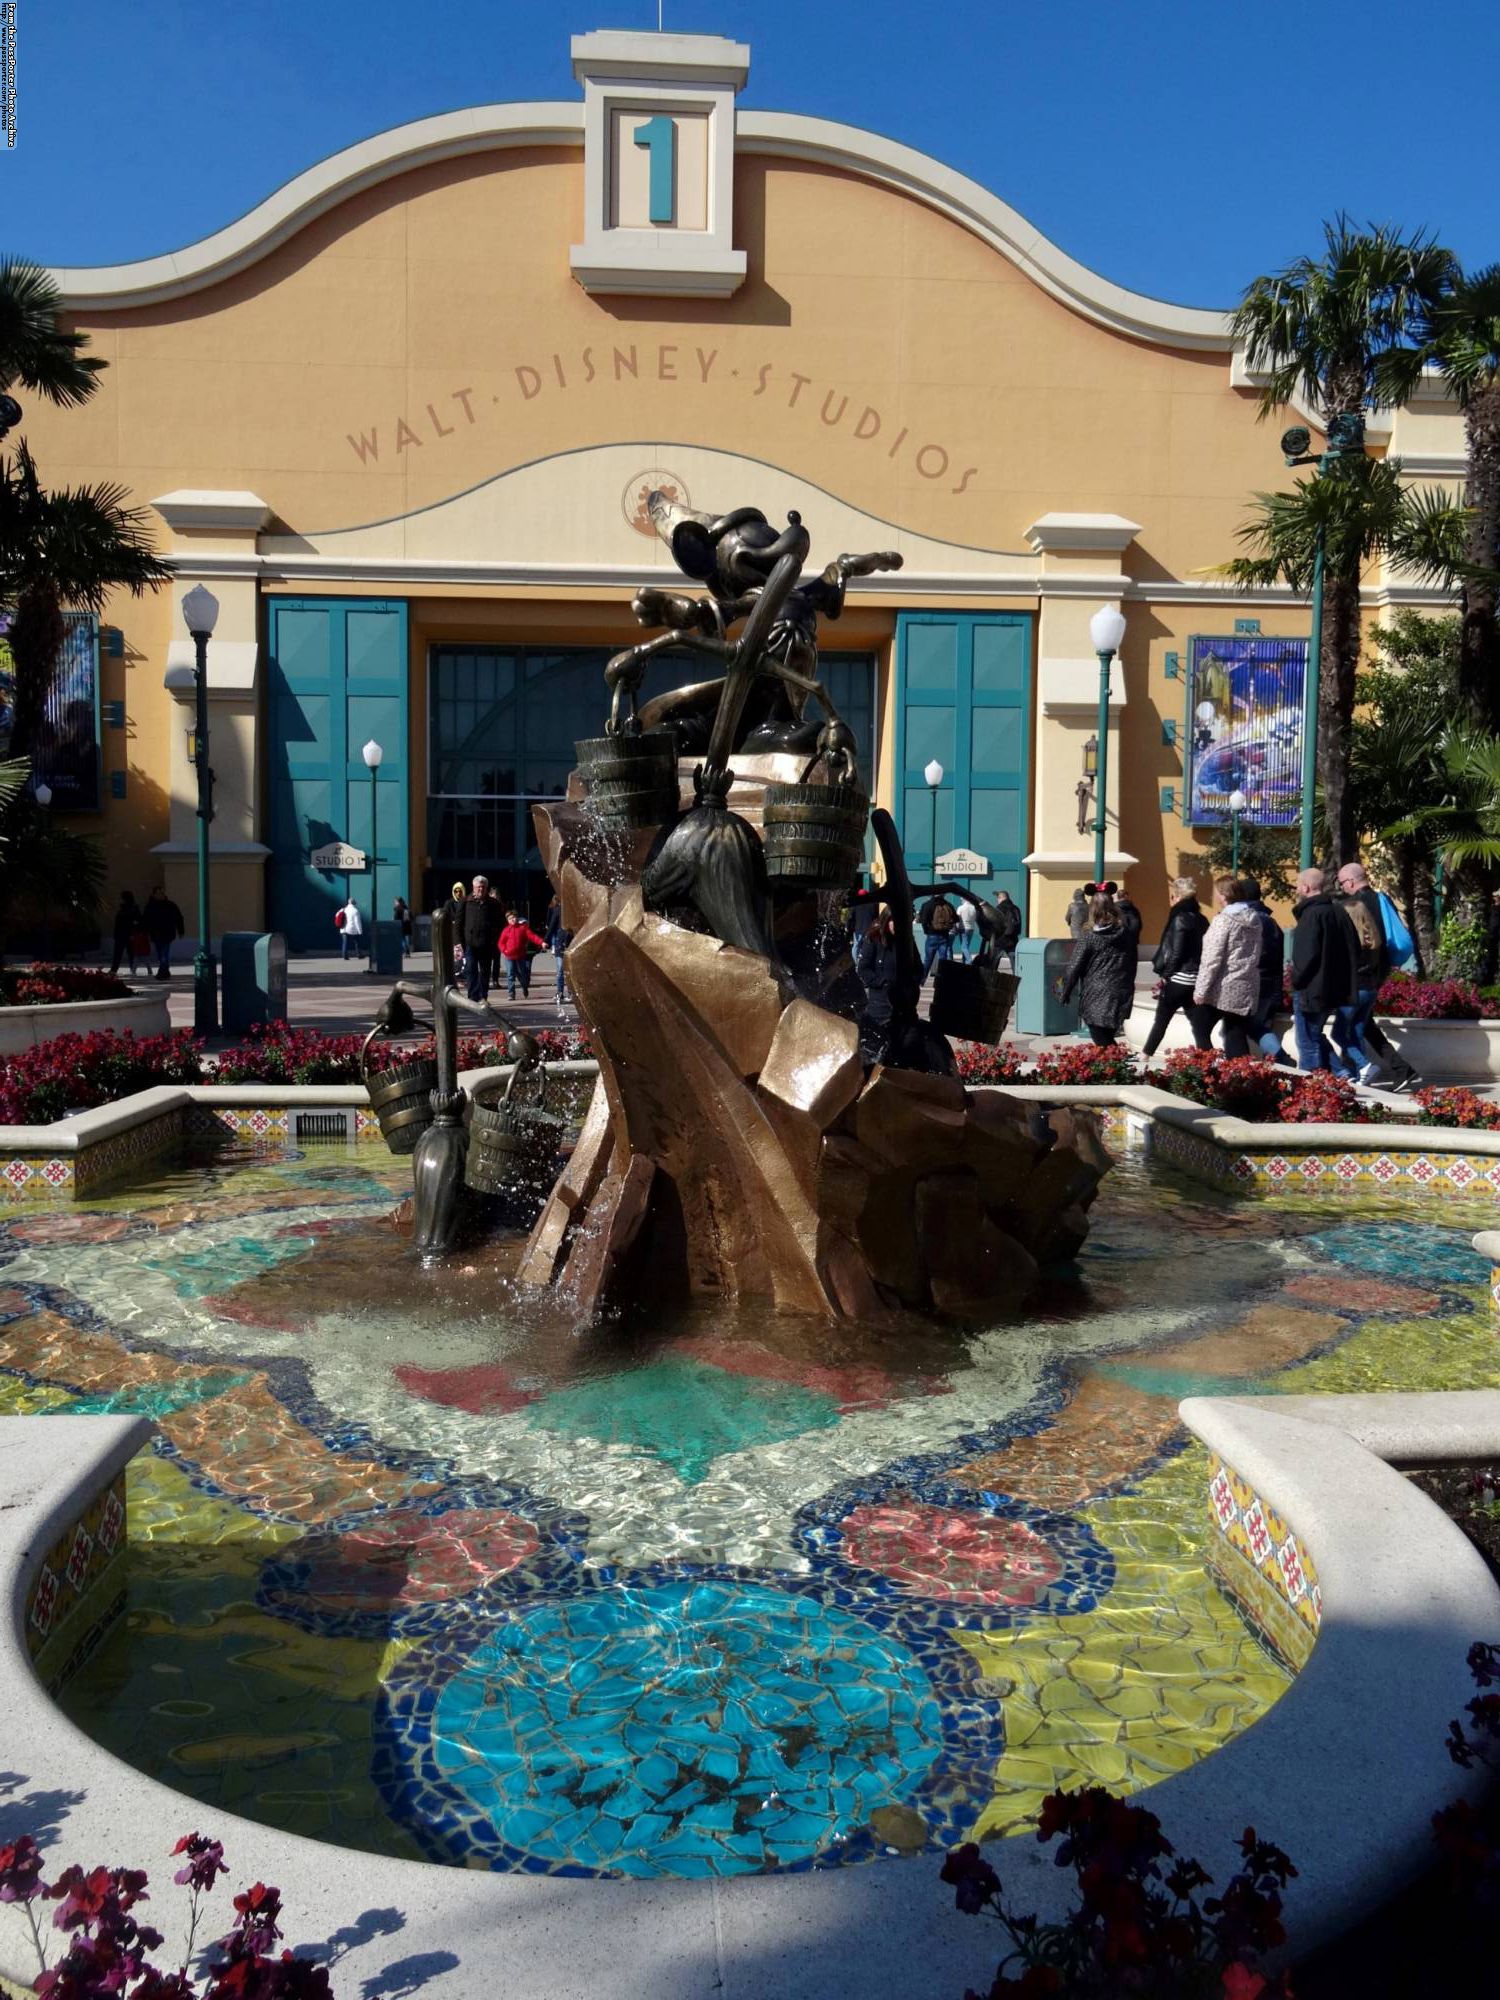 Disneyland Paris - Walt Disney Studios Park